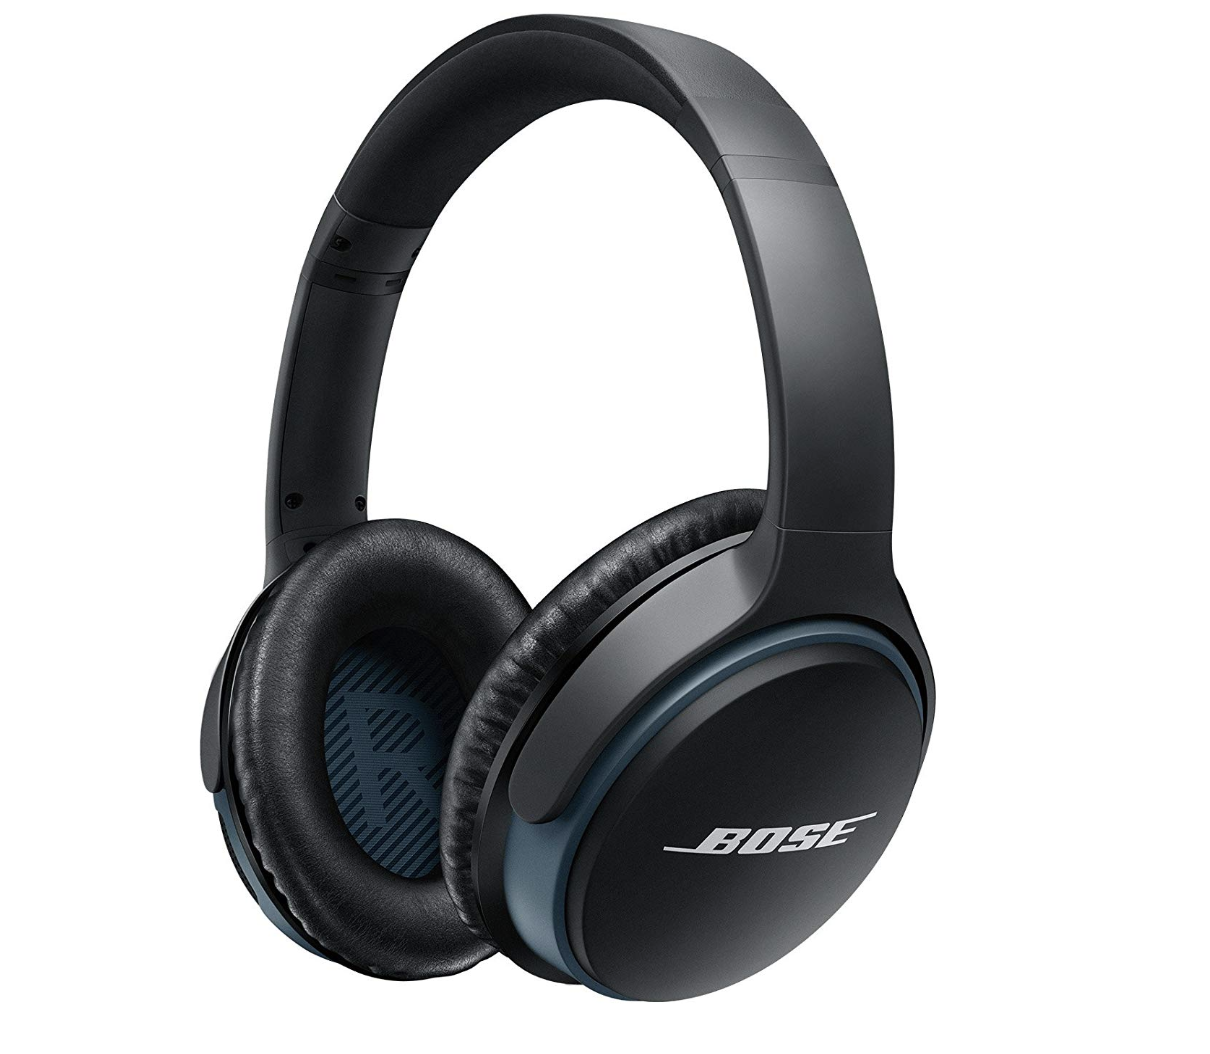 Bose SoundLink Around-Ear Wireless Headphones II - $159.99 (Down From $229.99)